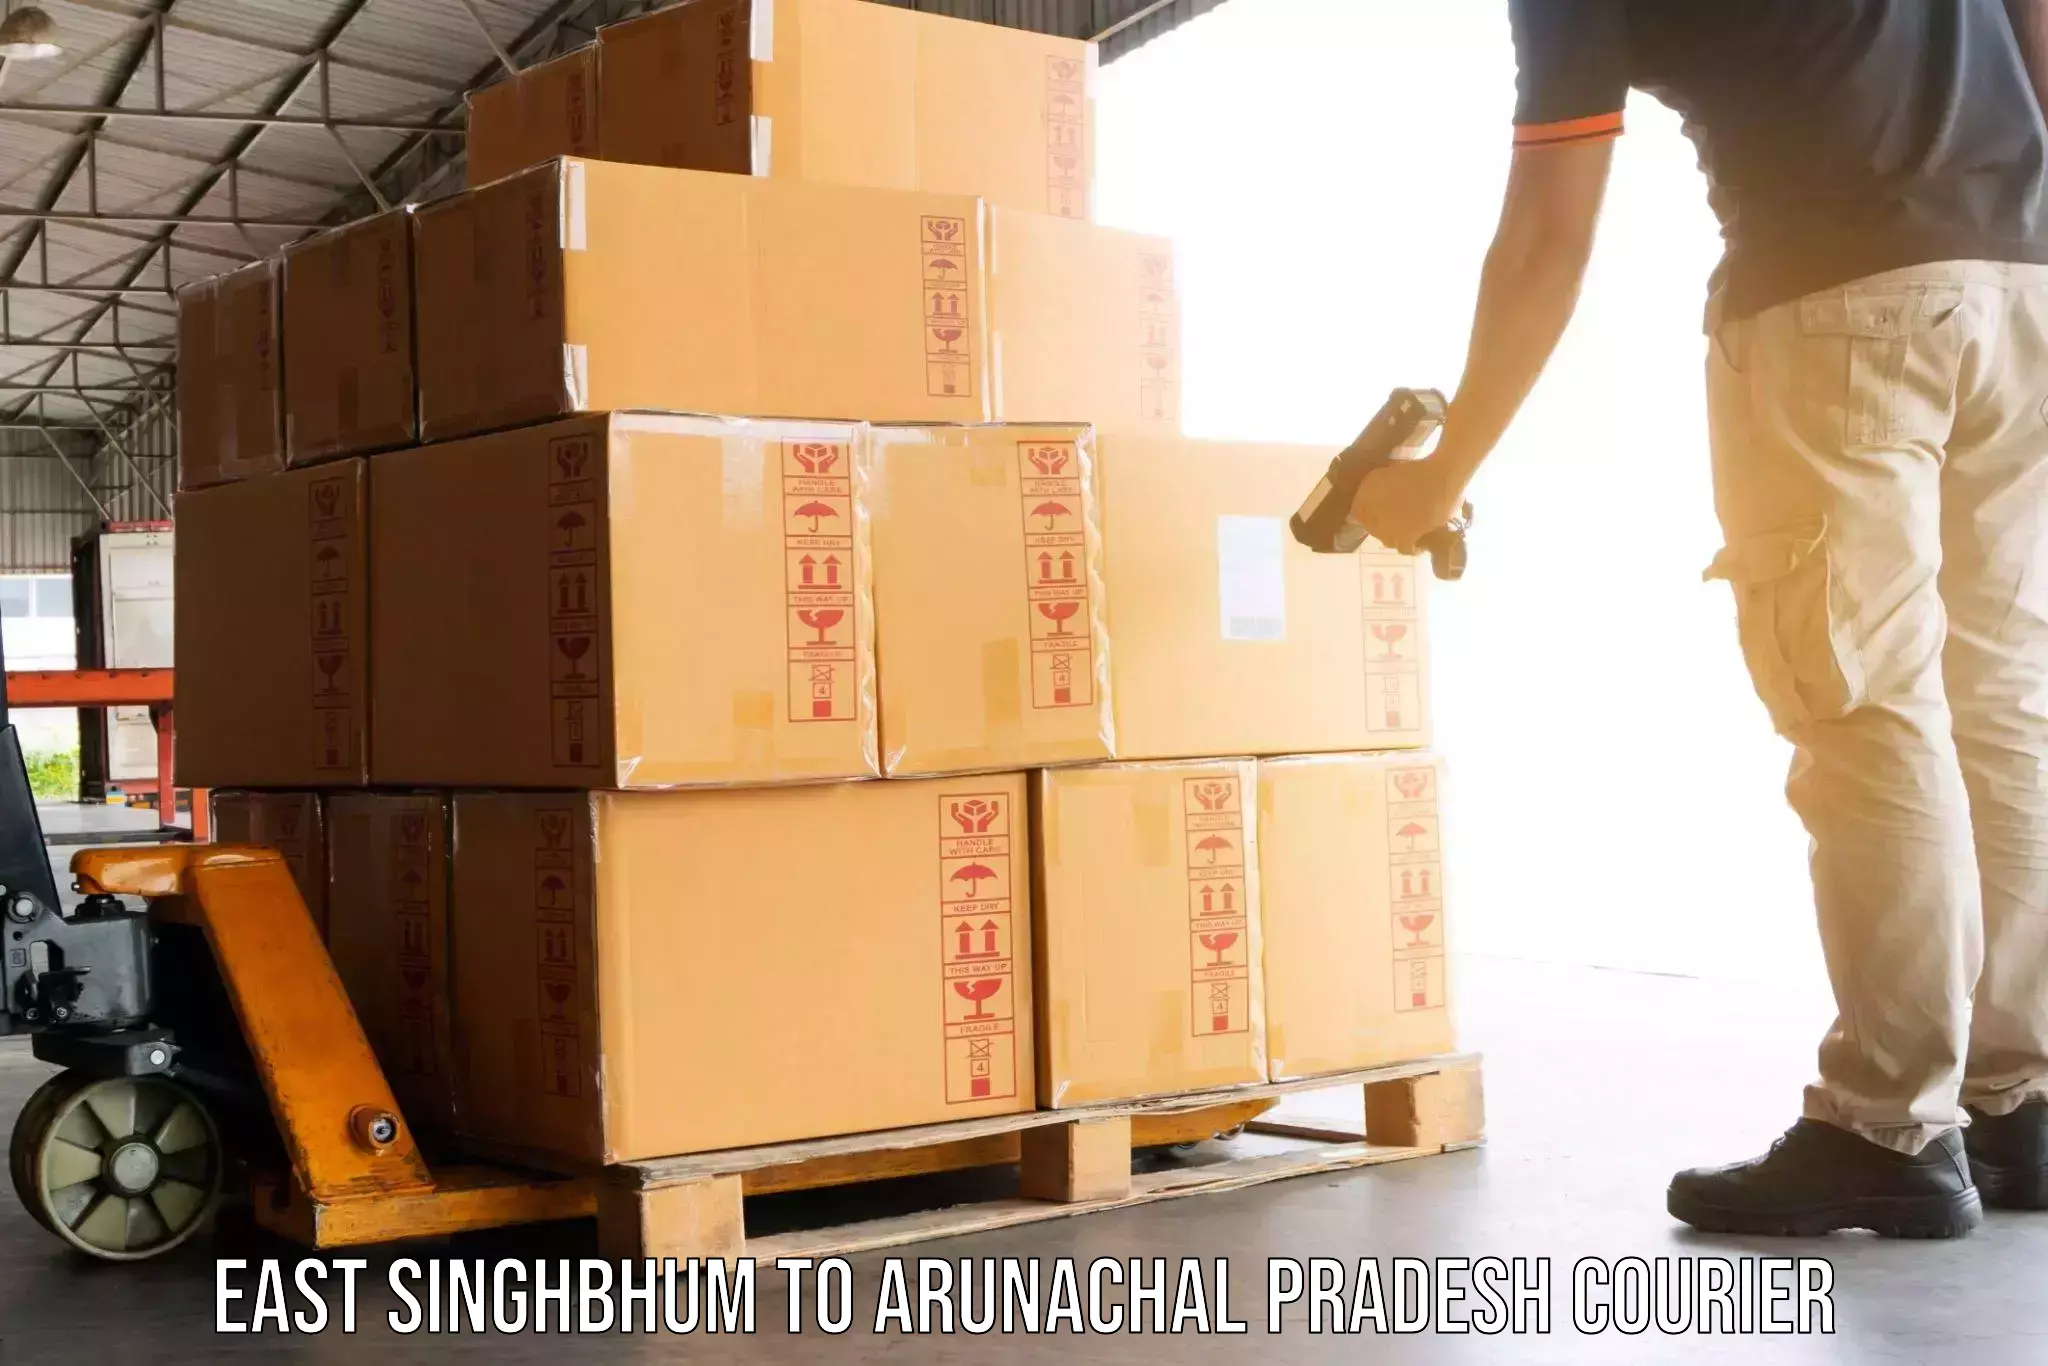 Quality relocation assistance East Singhbhum to Arunachal Pradesh